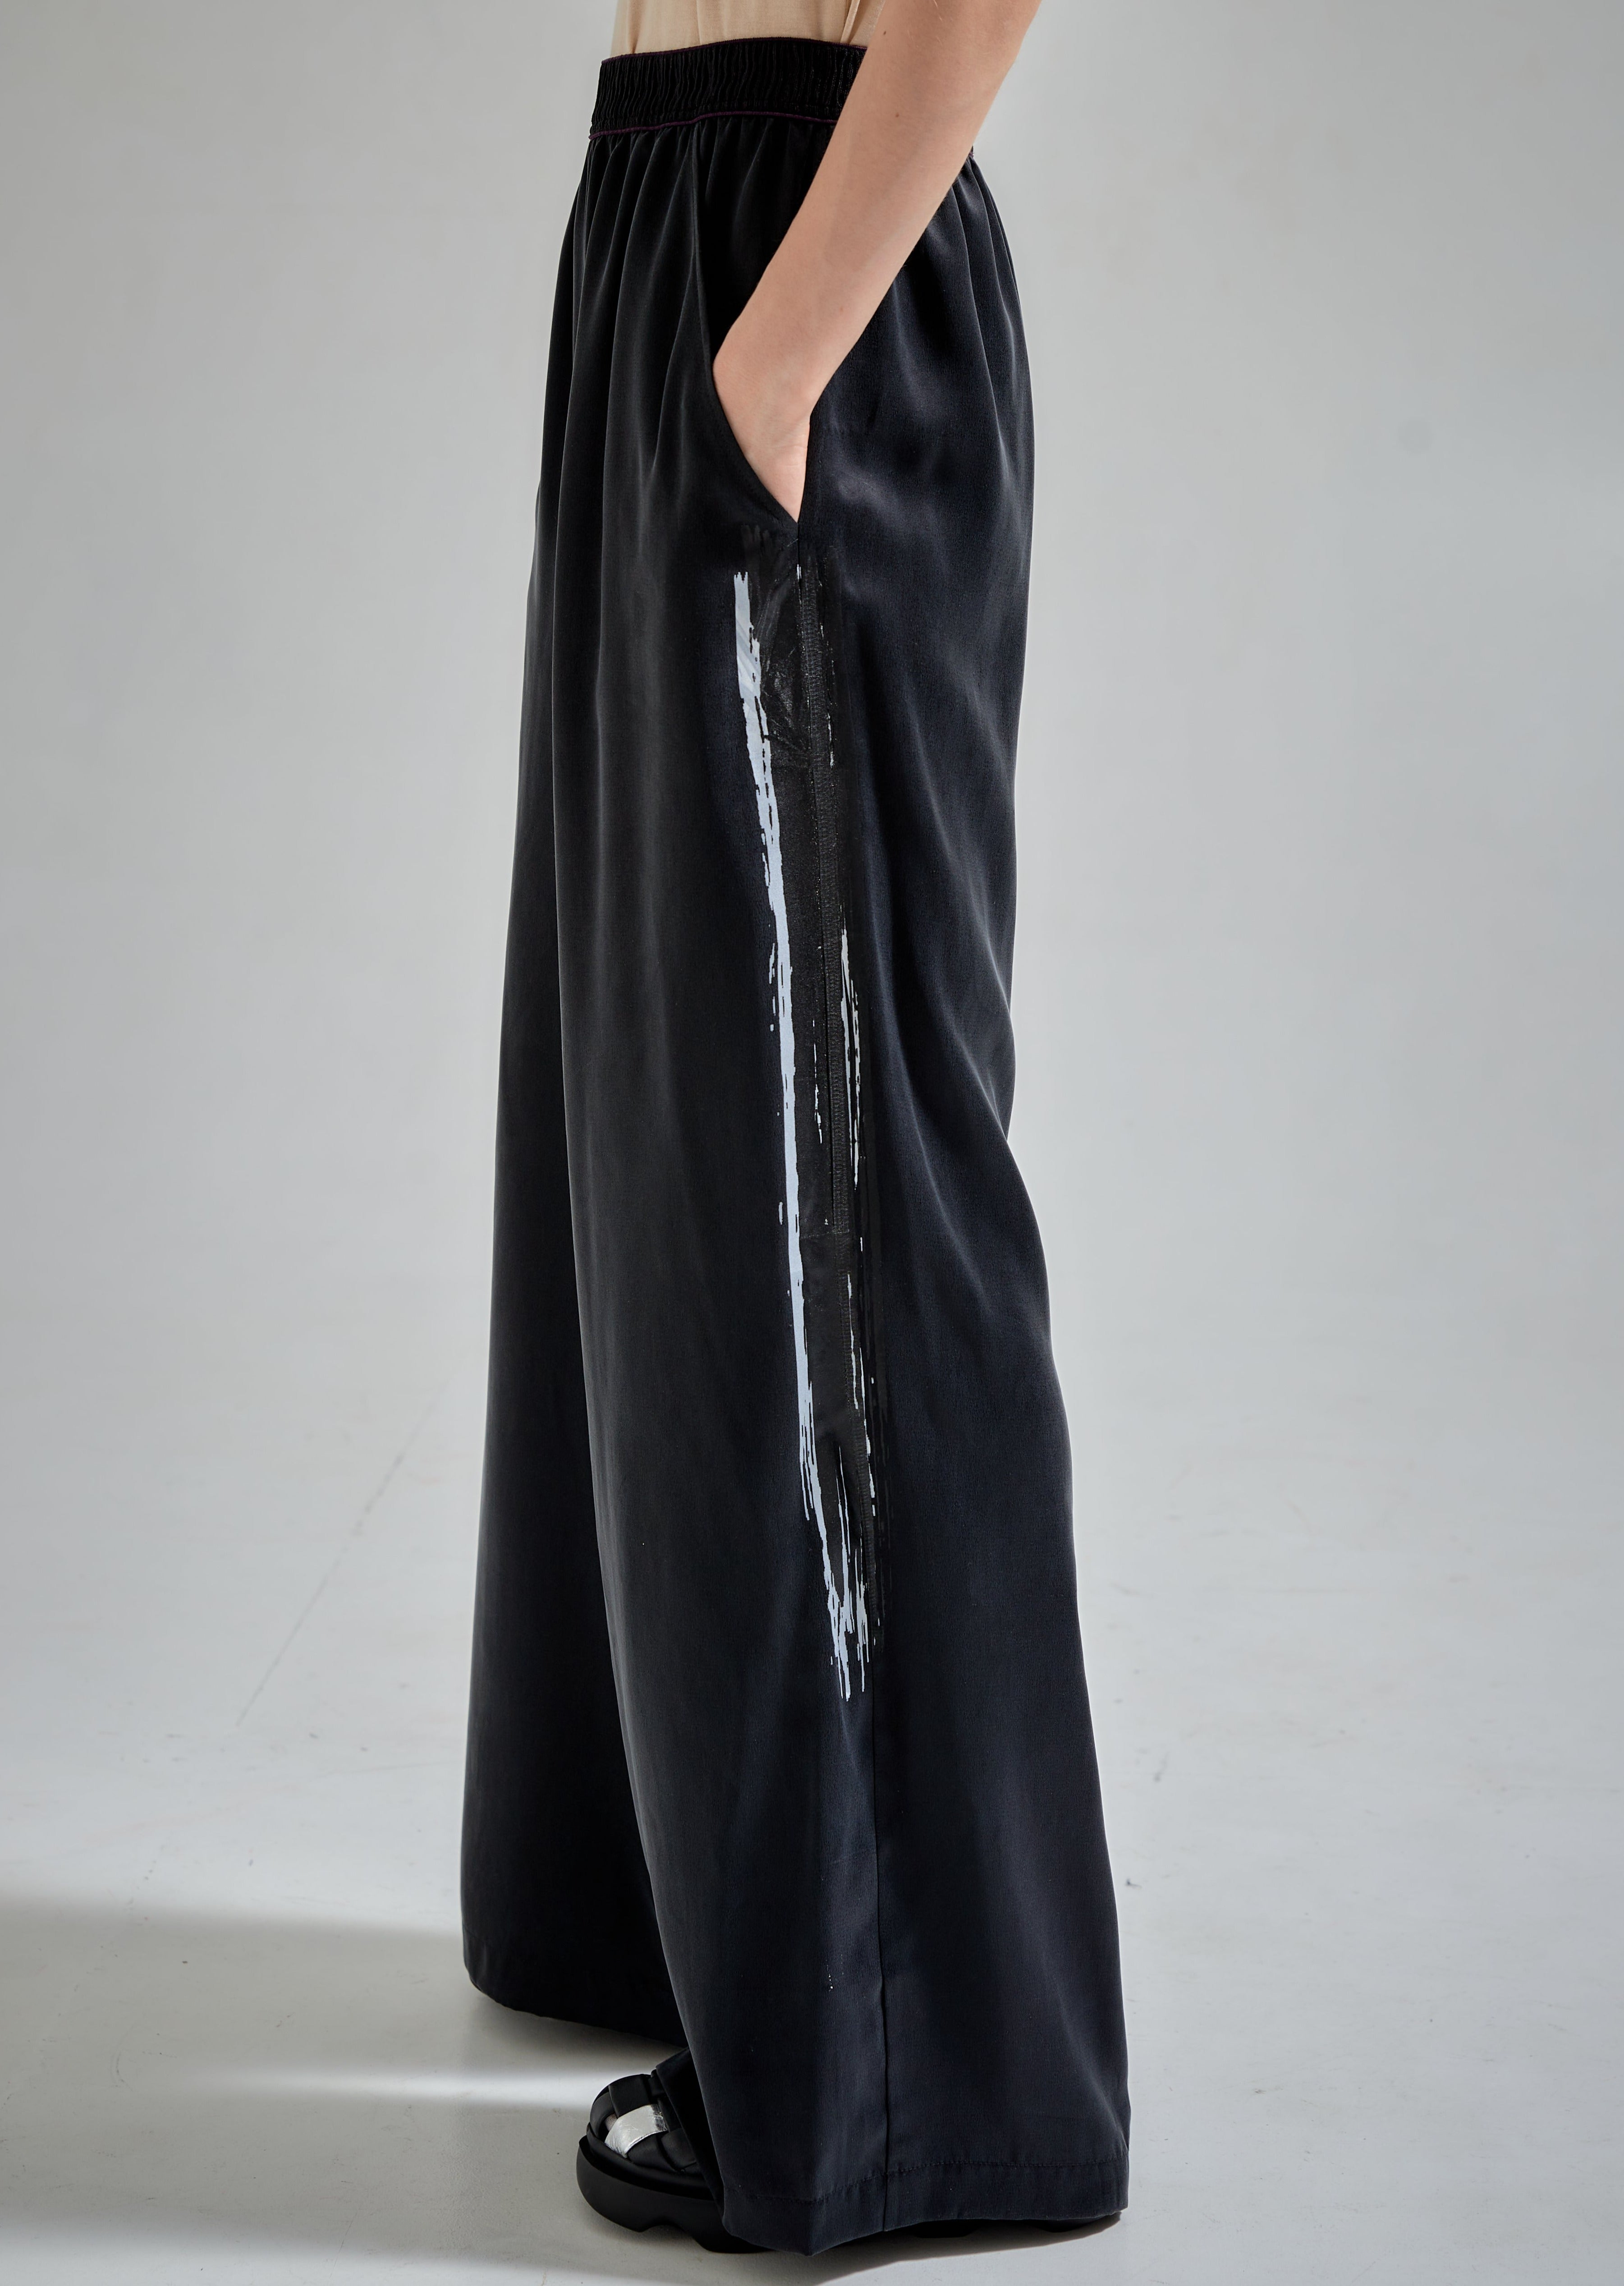 NY77 Design - Welch silk pants